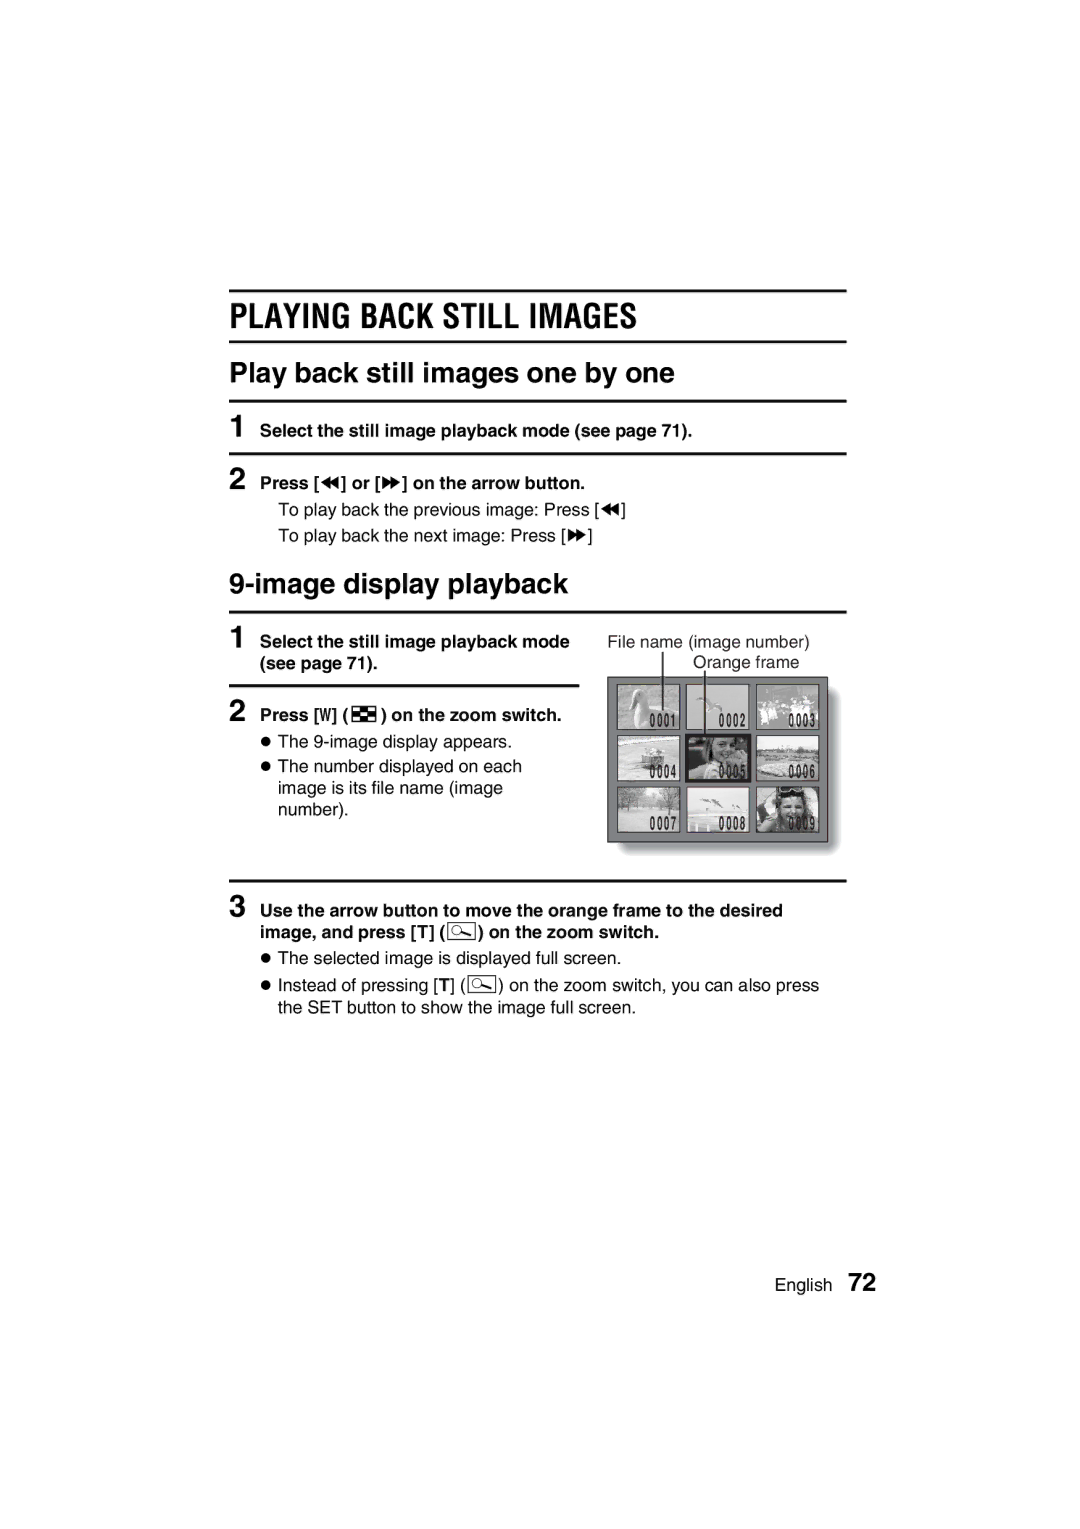 Sanyo VPC-J1EX instruction manual Playing Back Still Images, Play back still images one by one, Image display playback 